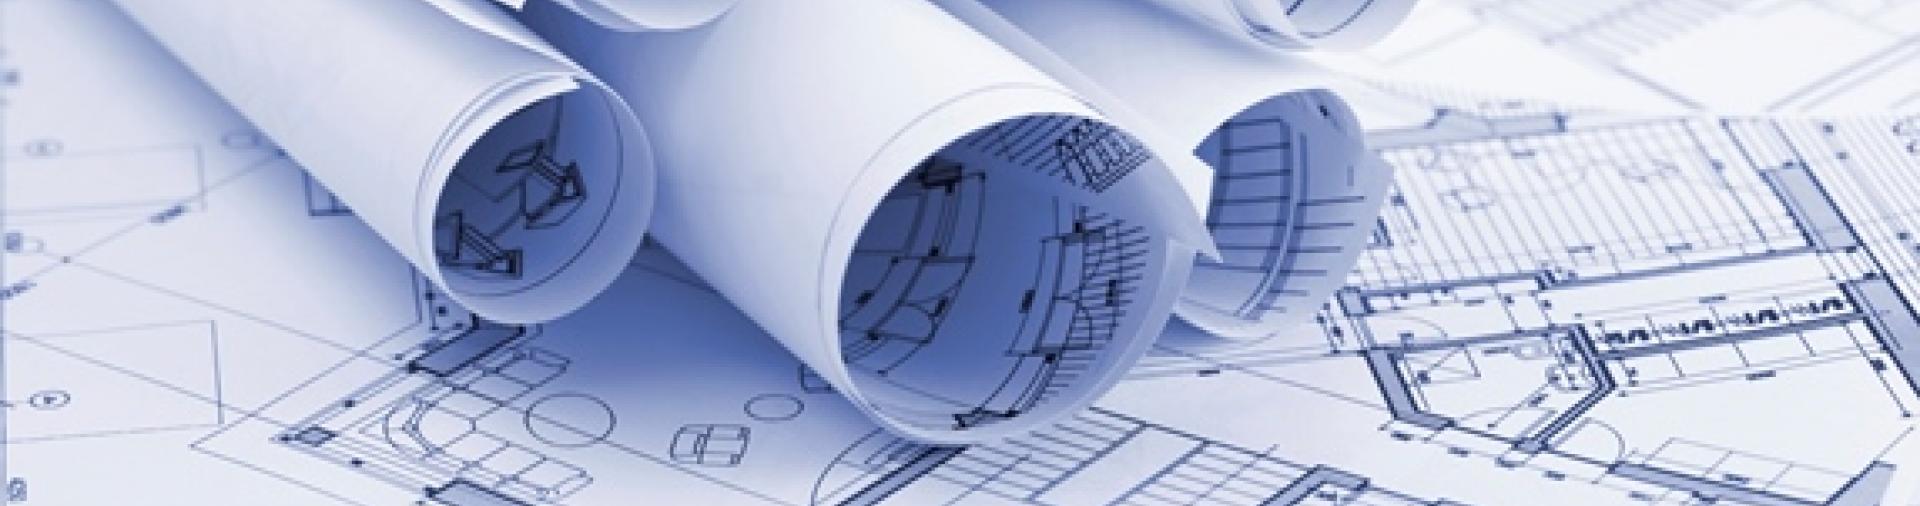 Image of building plans rolled up over a desk